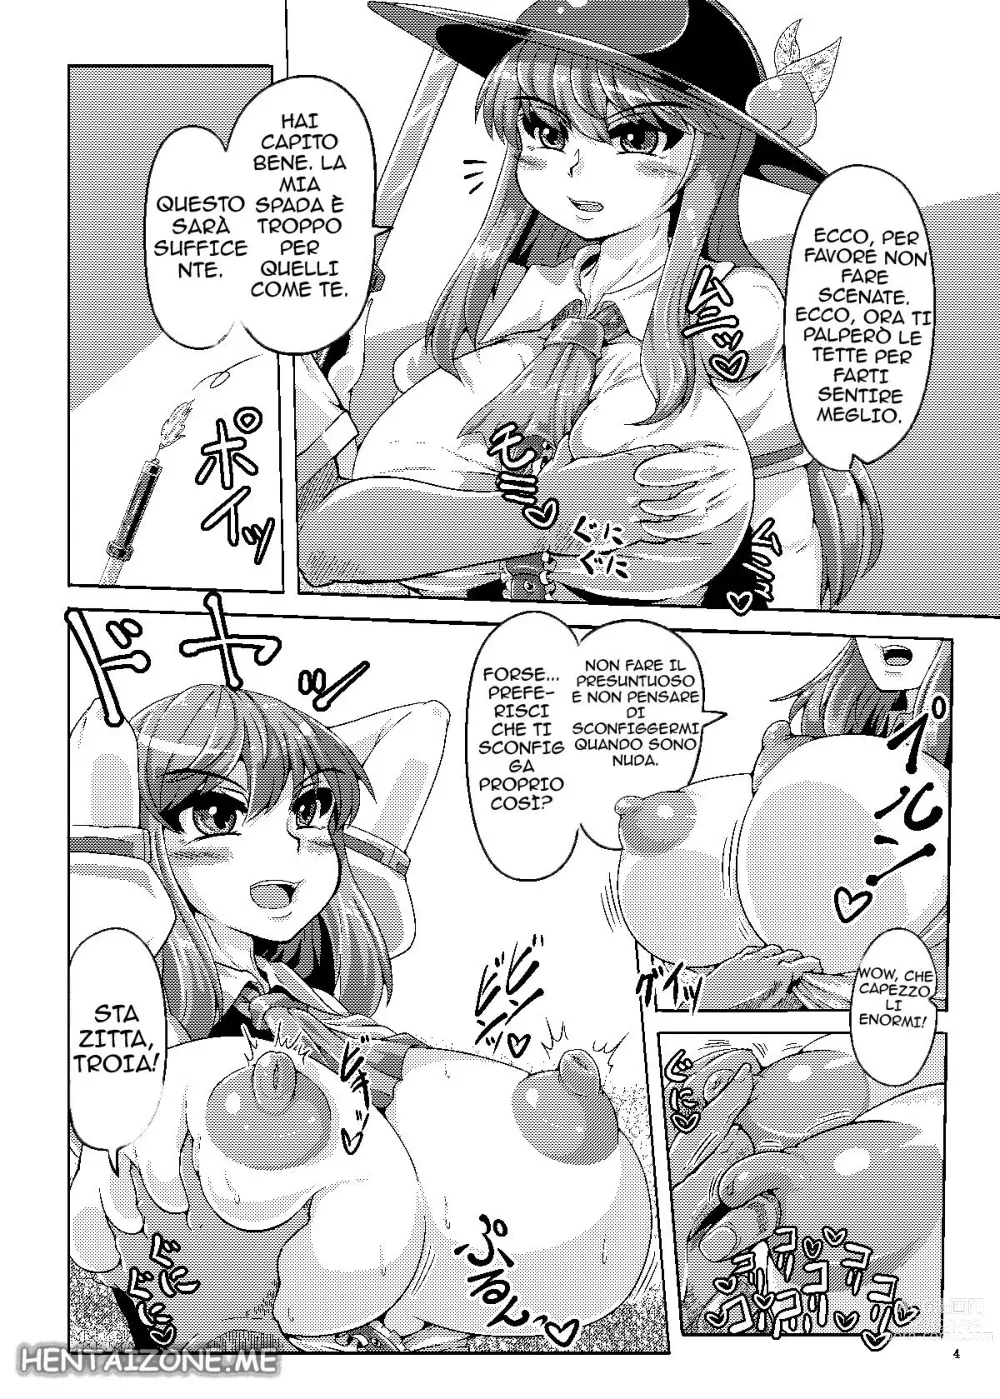 Page 3 of doujinshi Controllo Inconsapevole